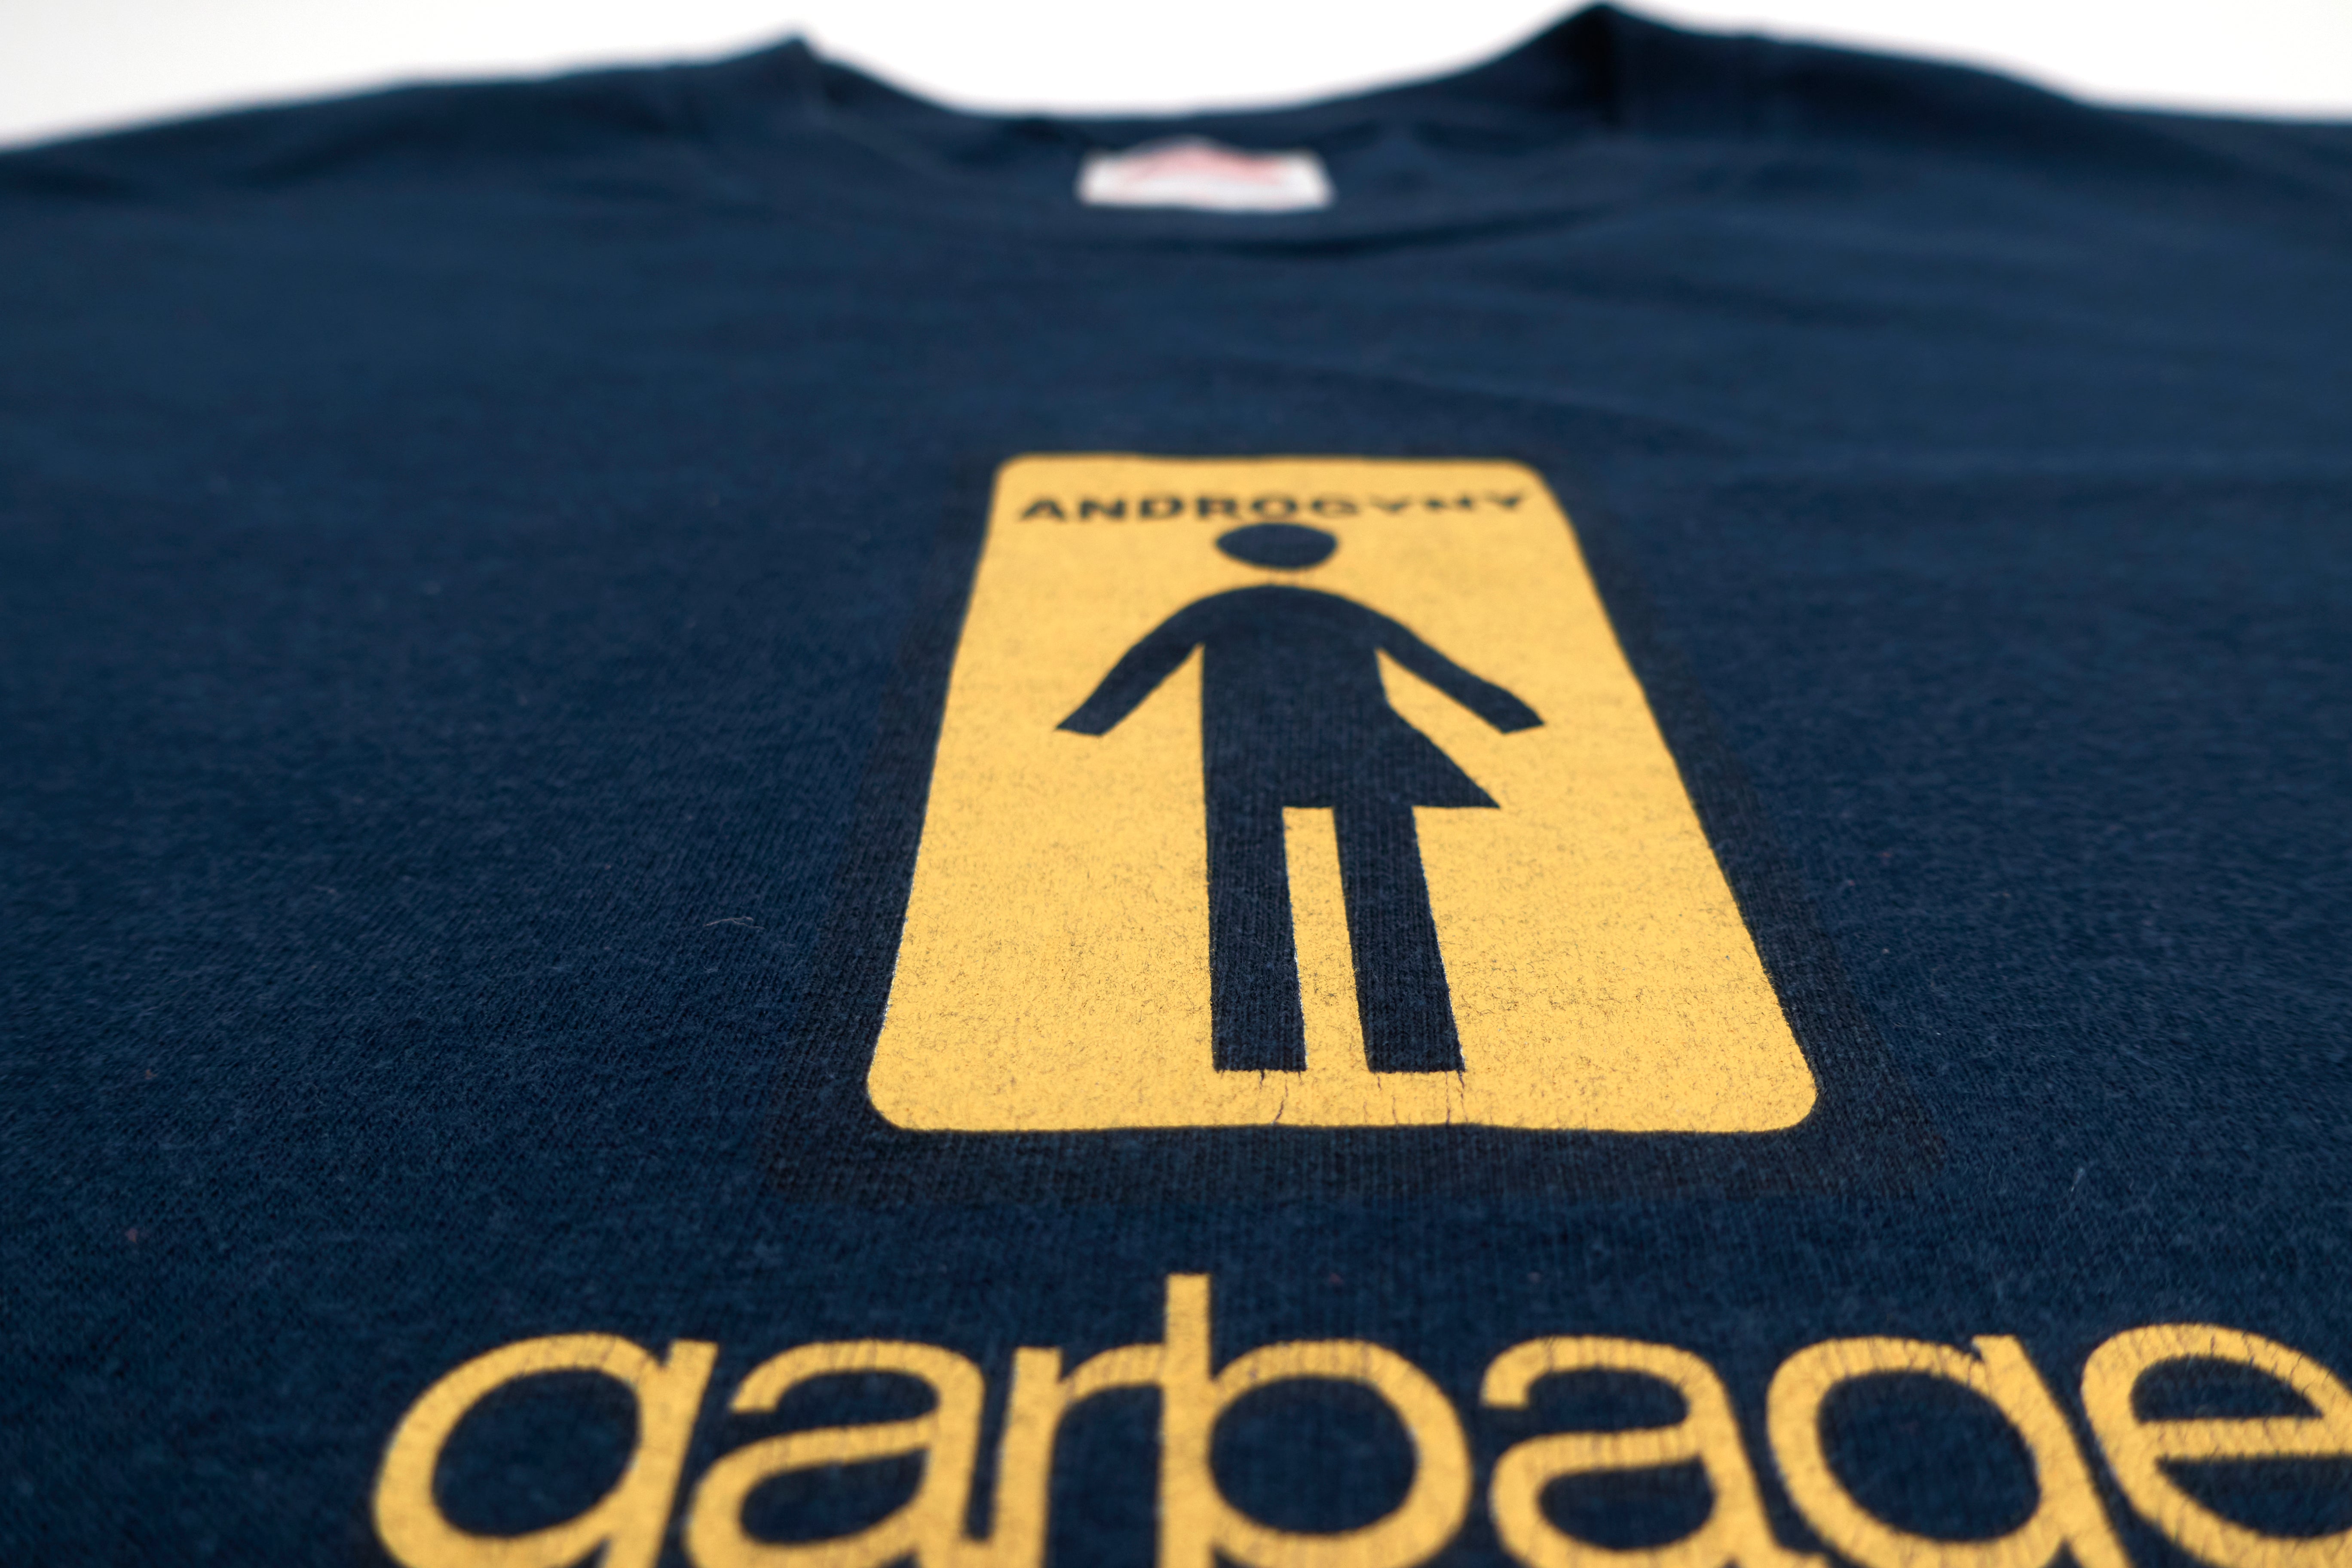 Garbage - Androgyny 2001 Tour Shirt Size XL